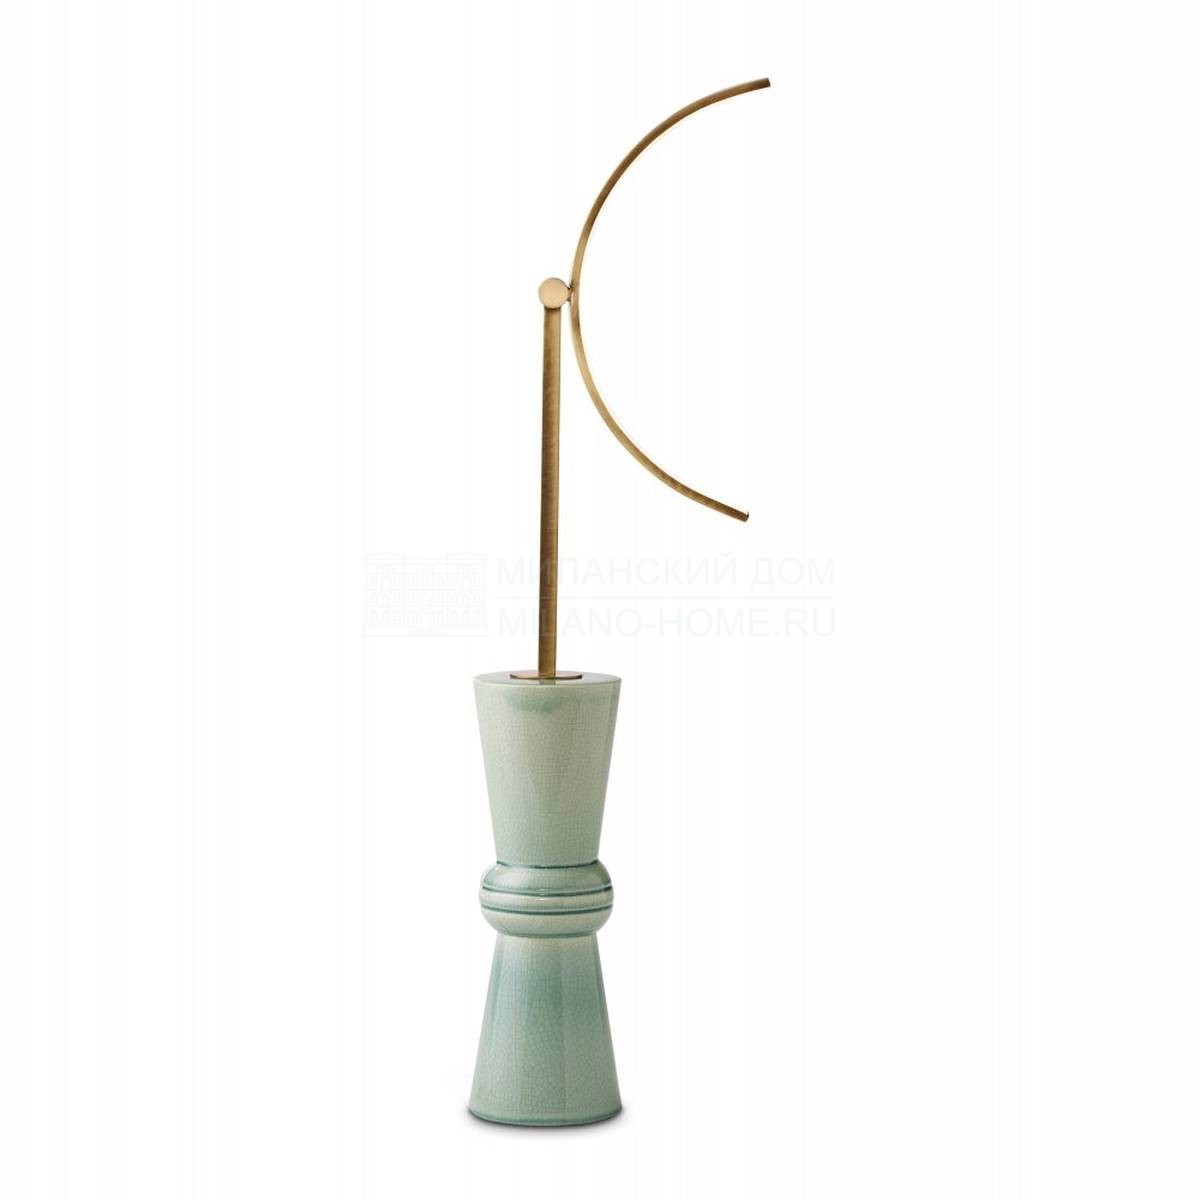 Настольная лампа Malibu B table lamp из Италии фабрики MARIONI